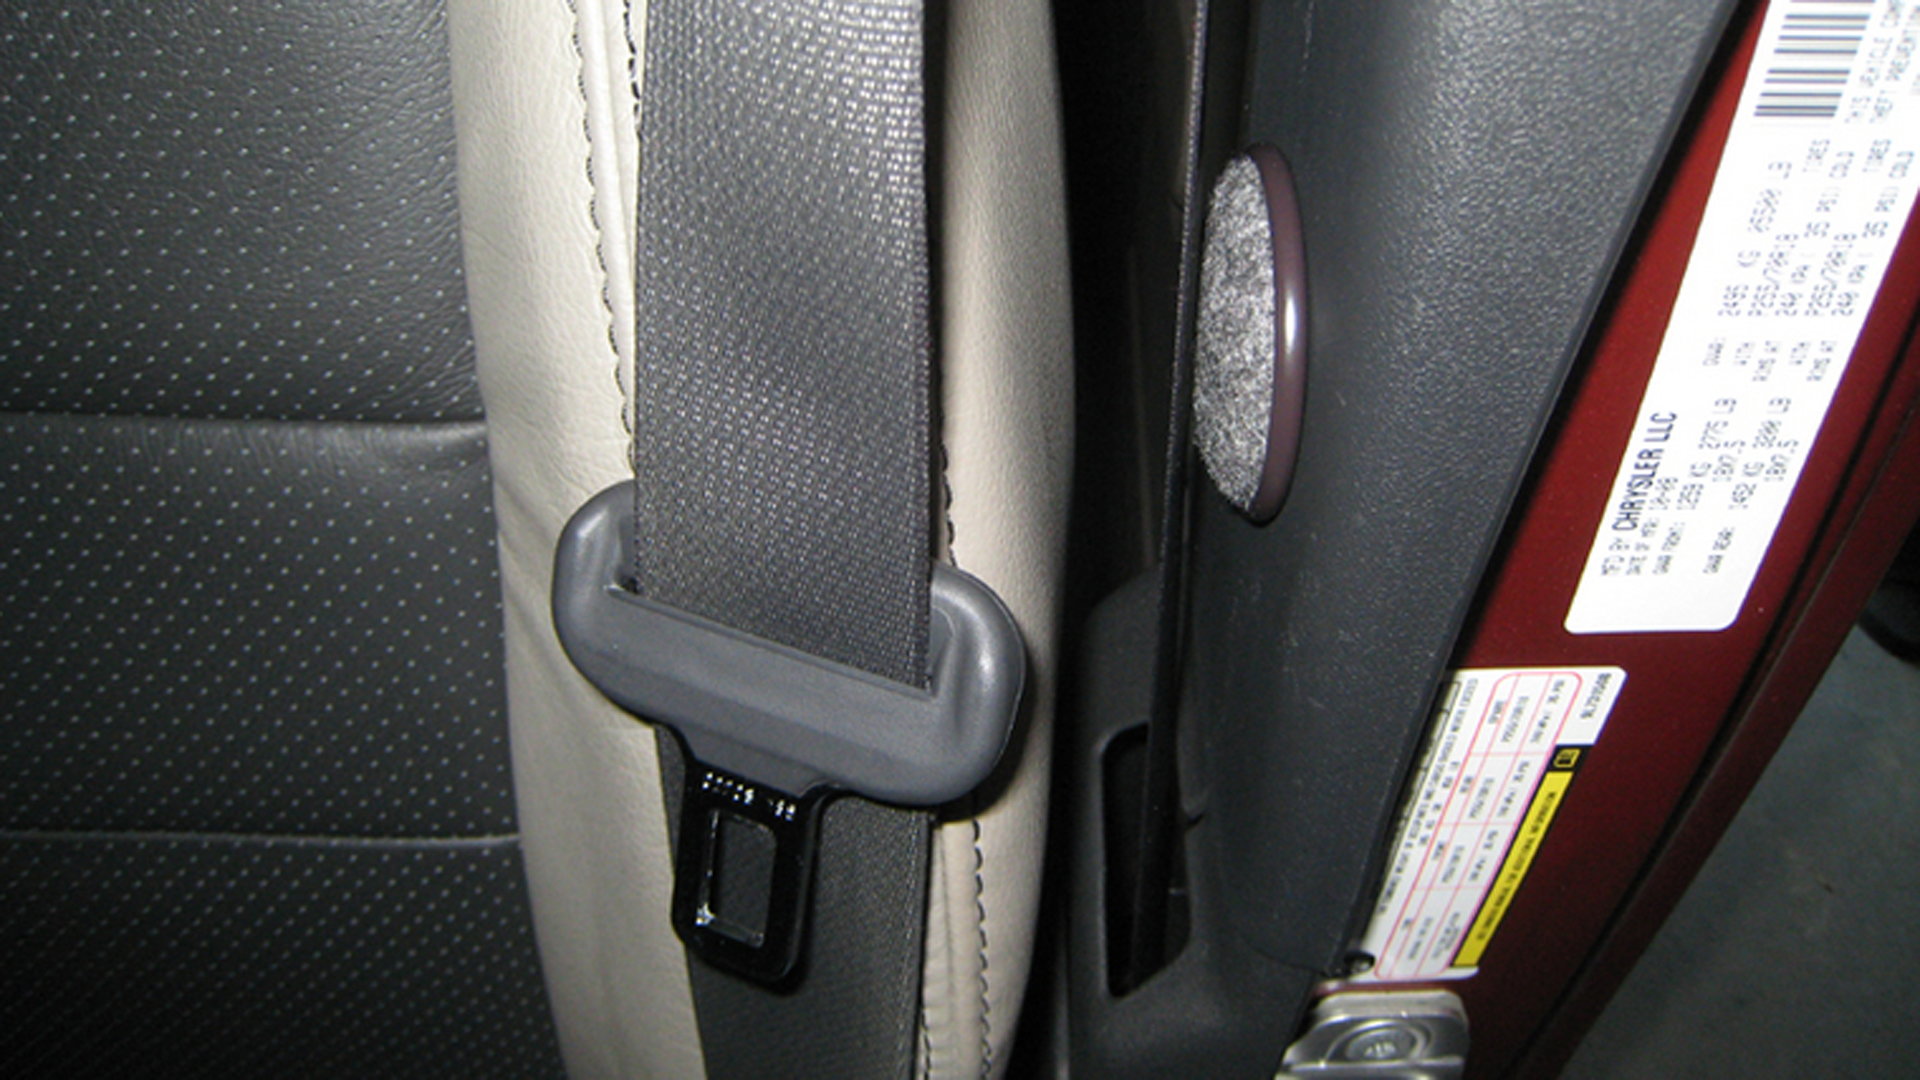 Jeep Wrangler JK: How to Disable Seat Belt Chime | Jk-forum